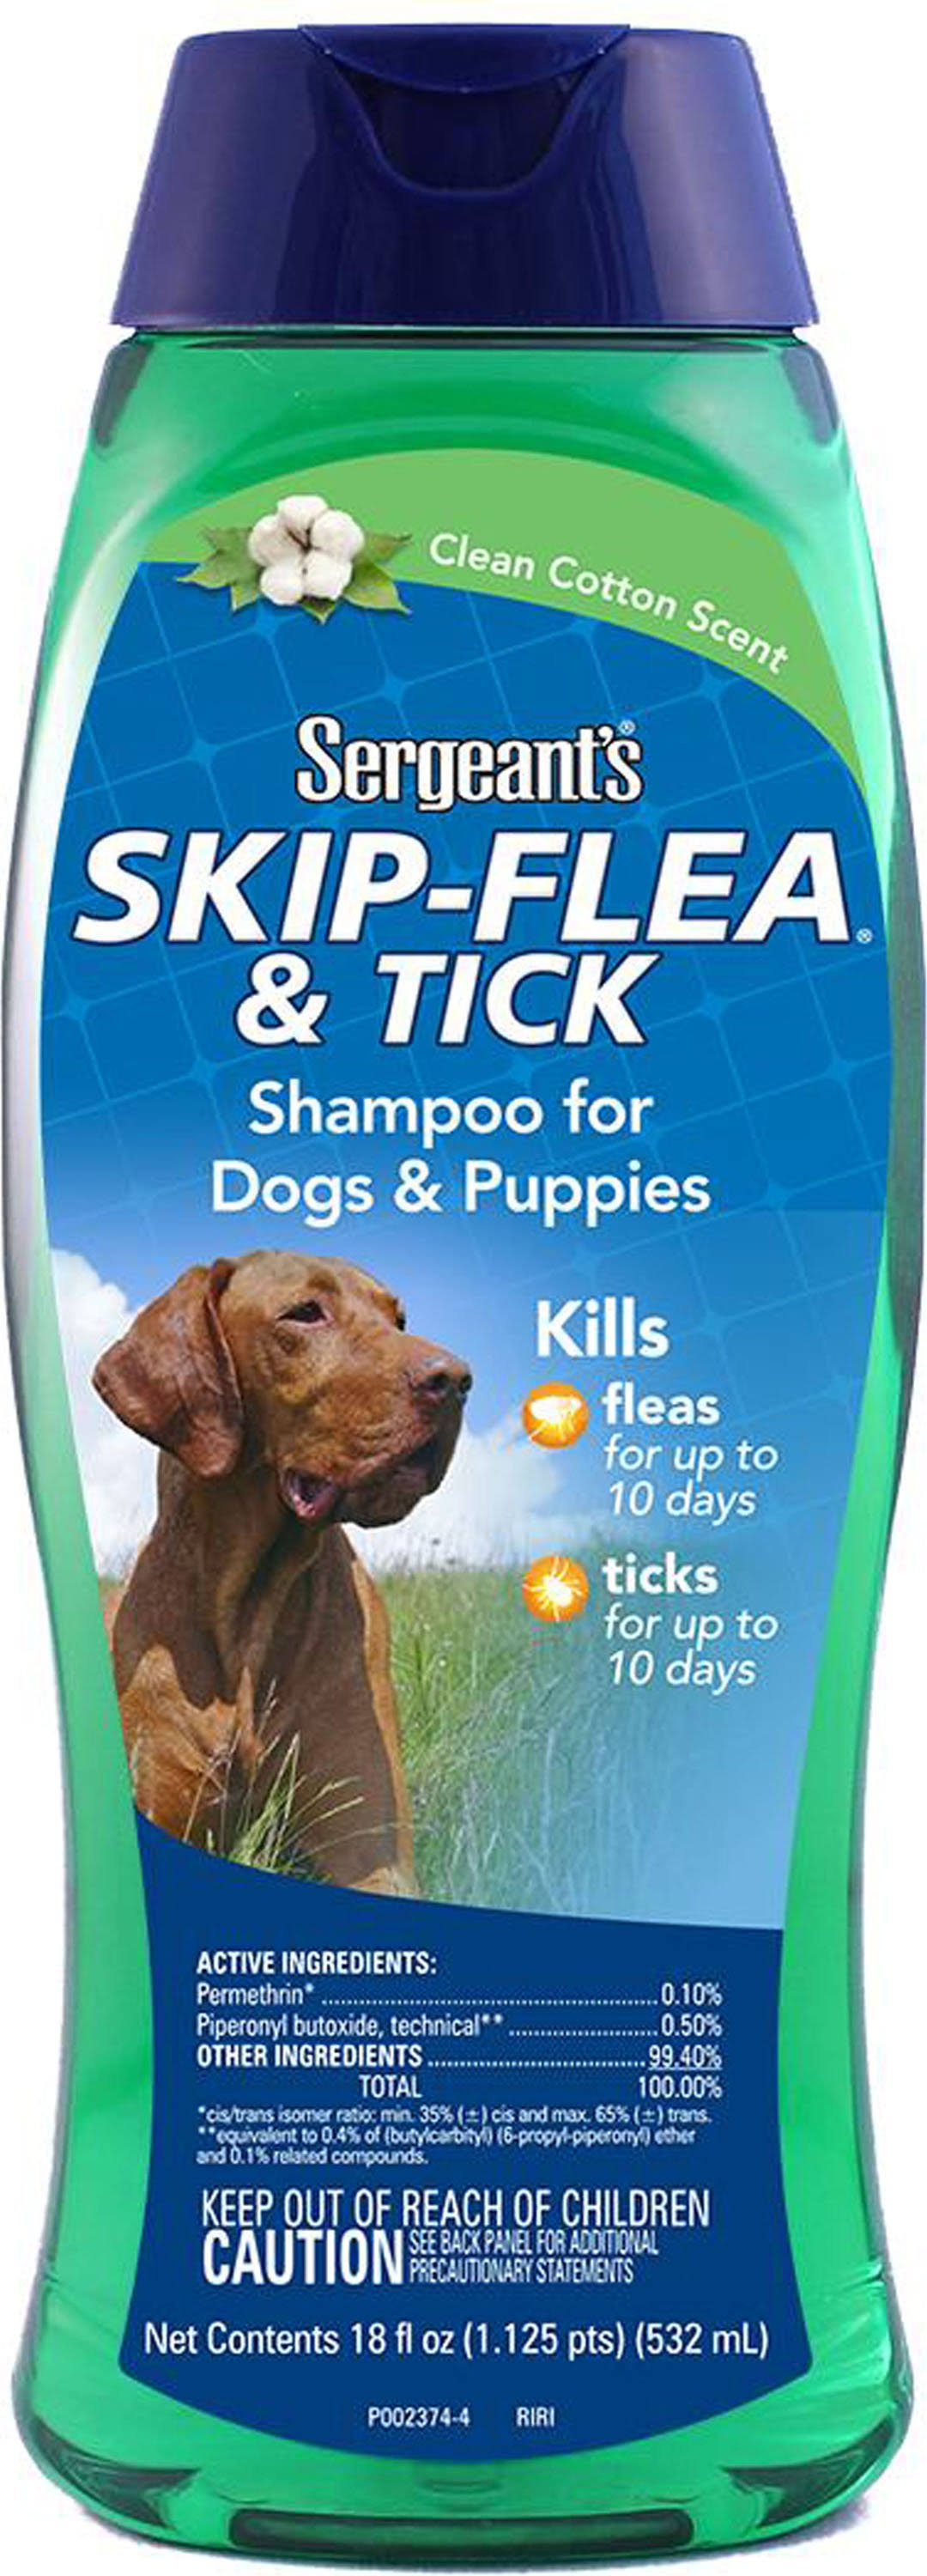 Sergeant's Skip-flea and Tick Dog Shampoo - 18oz